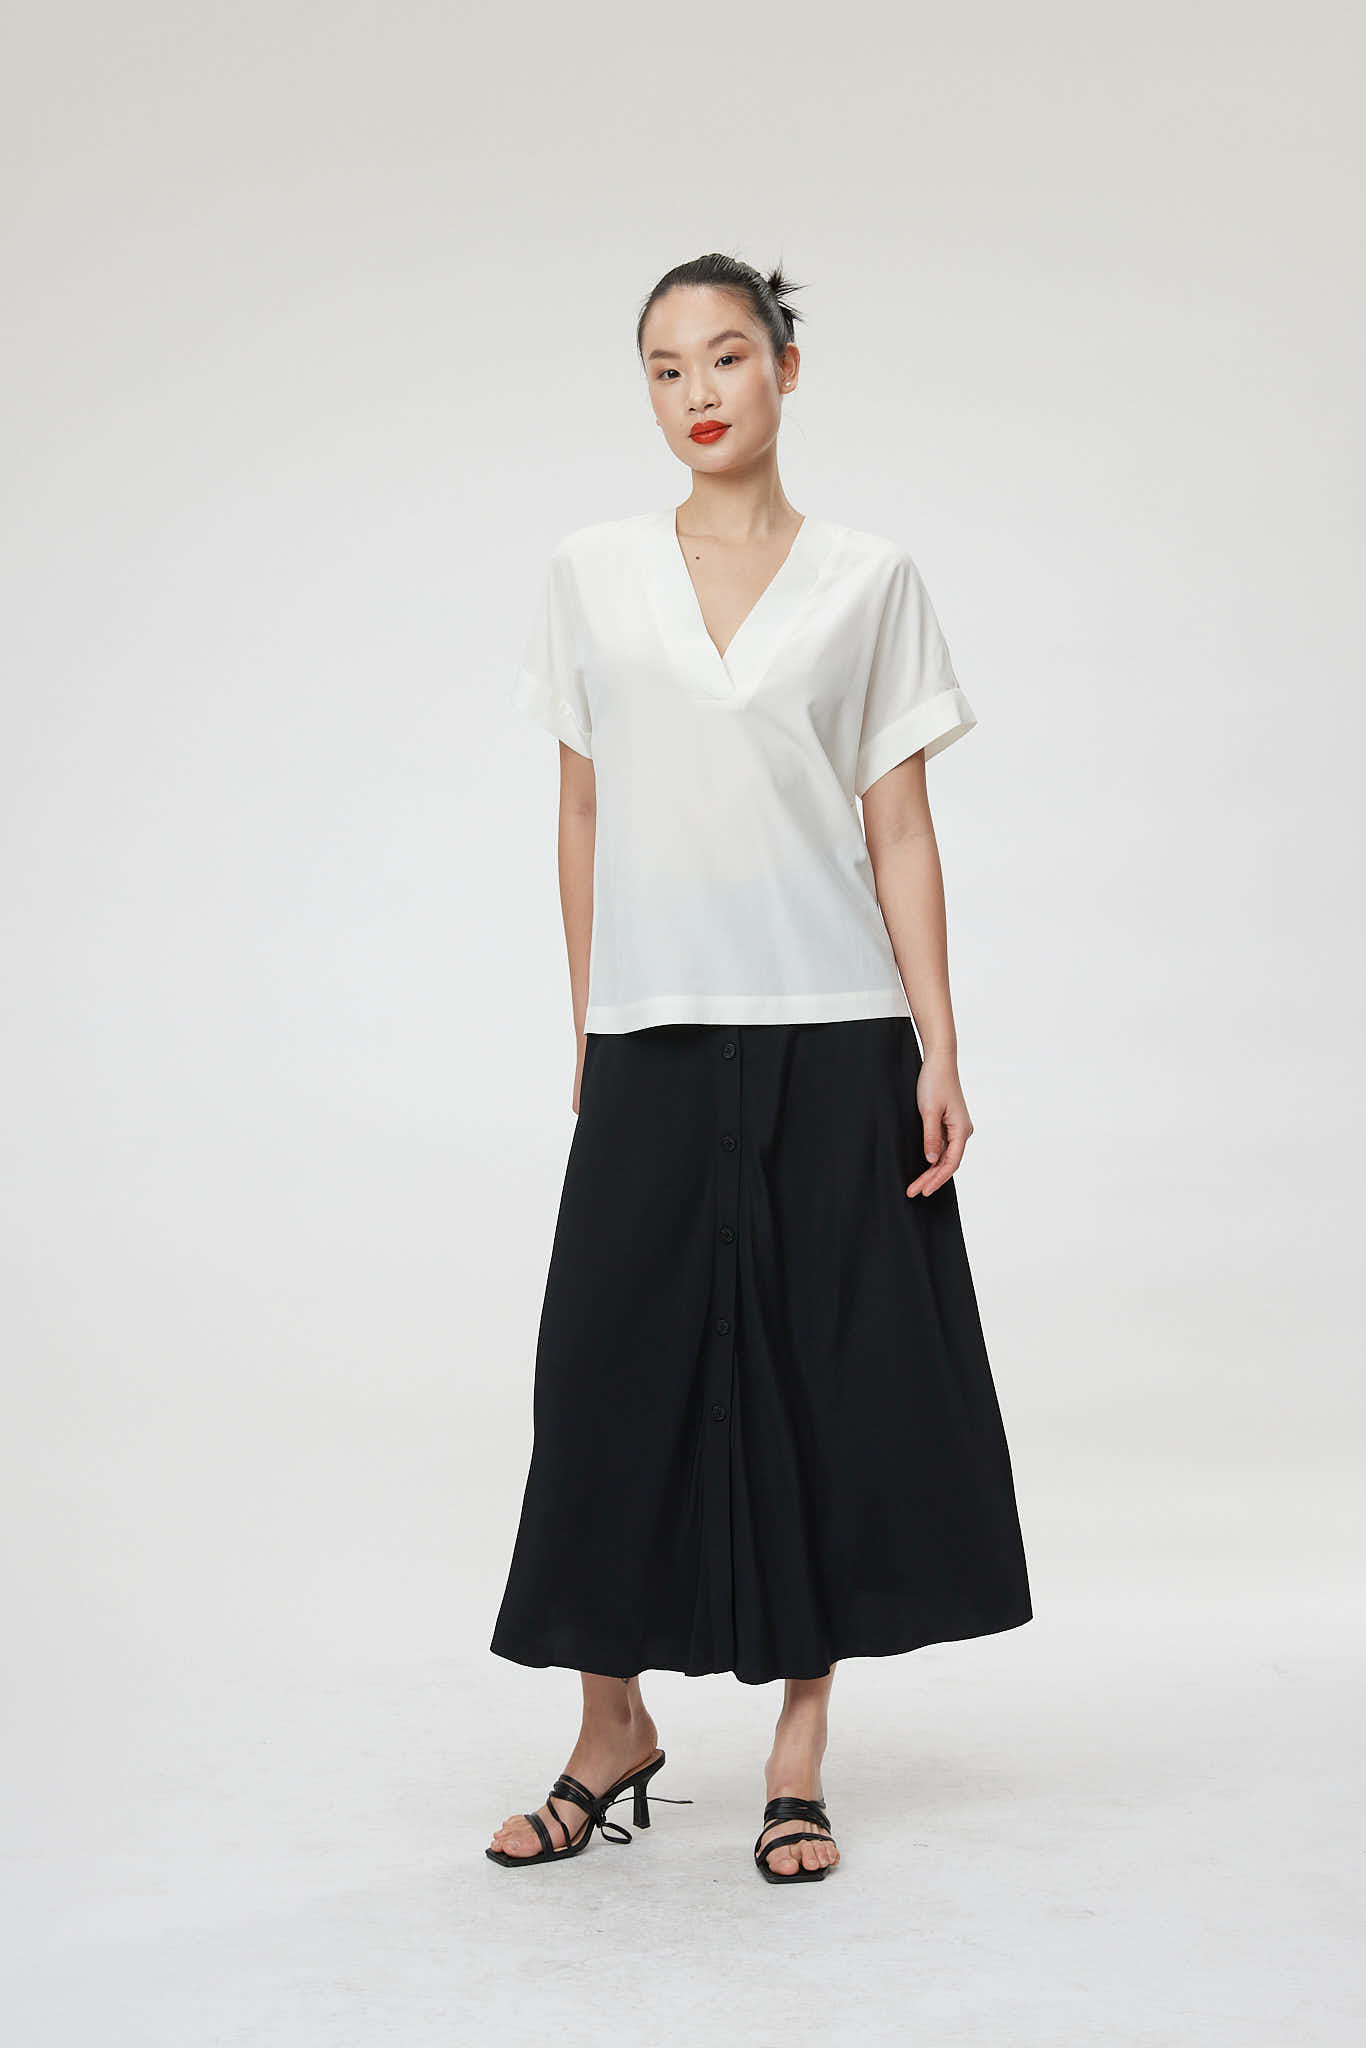 Lecce Blouse – V-neck blouse in white